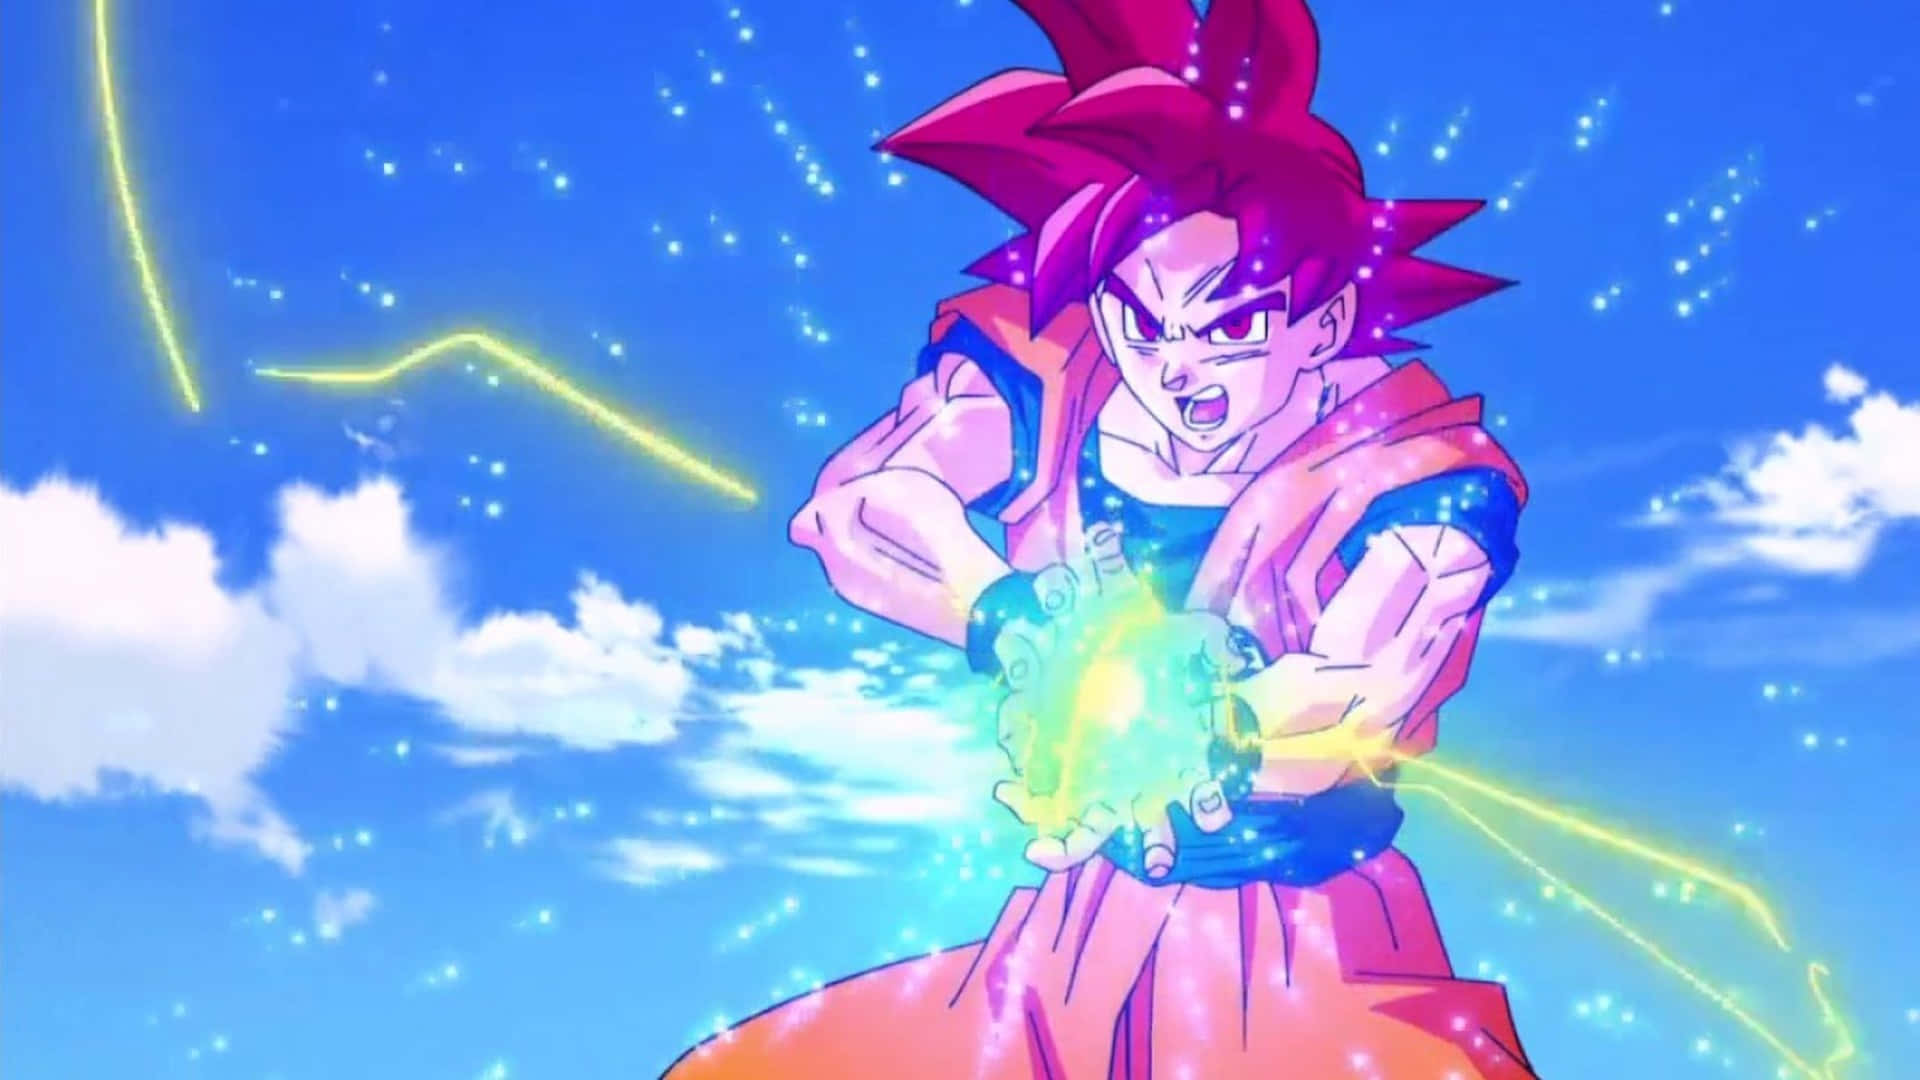 Dragonball Z: Super Saiyan Goku Sfoggiando I Suoi Poteri Nel Cielo Sfondo